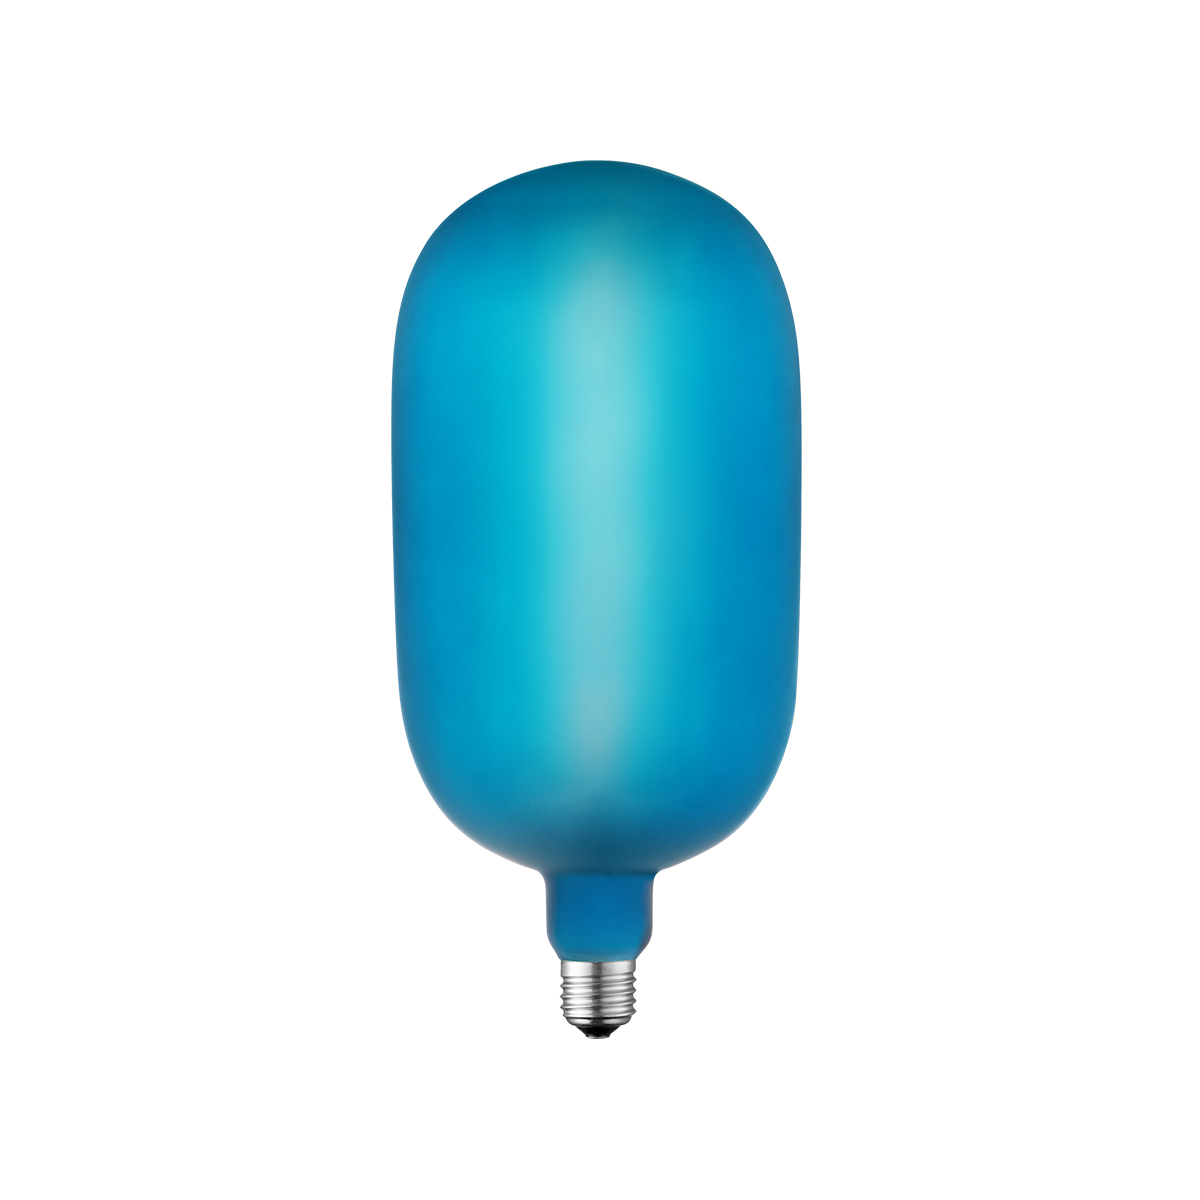 Tangla lighting - TLB-9001-04BL - LED Light Bulb Single Spiral filament - 4W blue opal - medium - non dimmable - E27